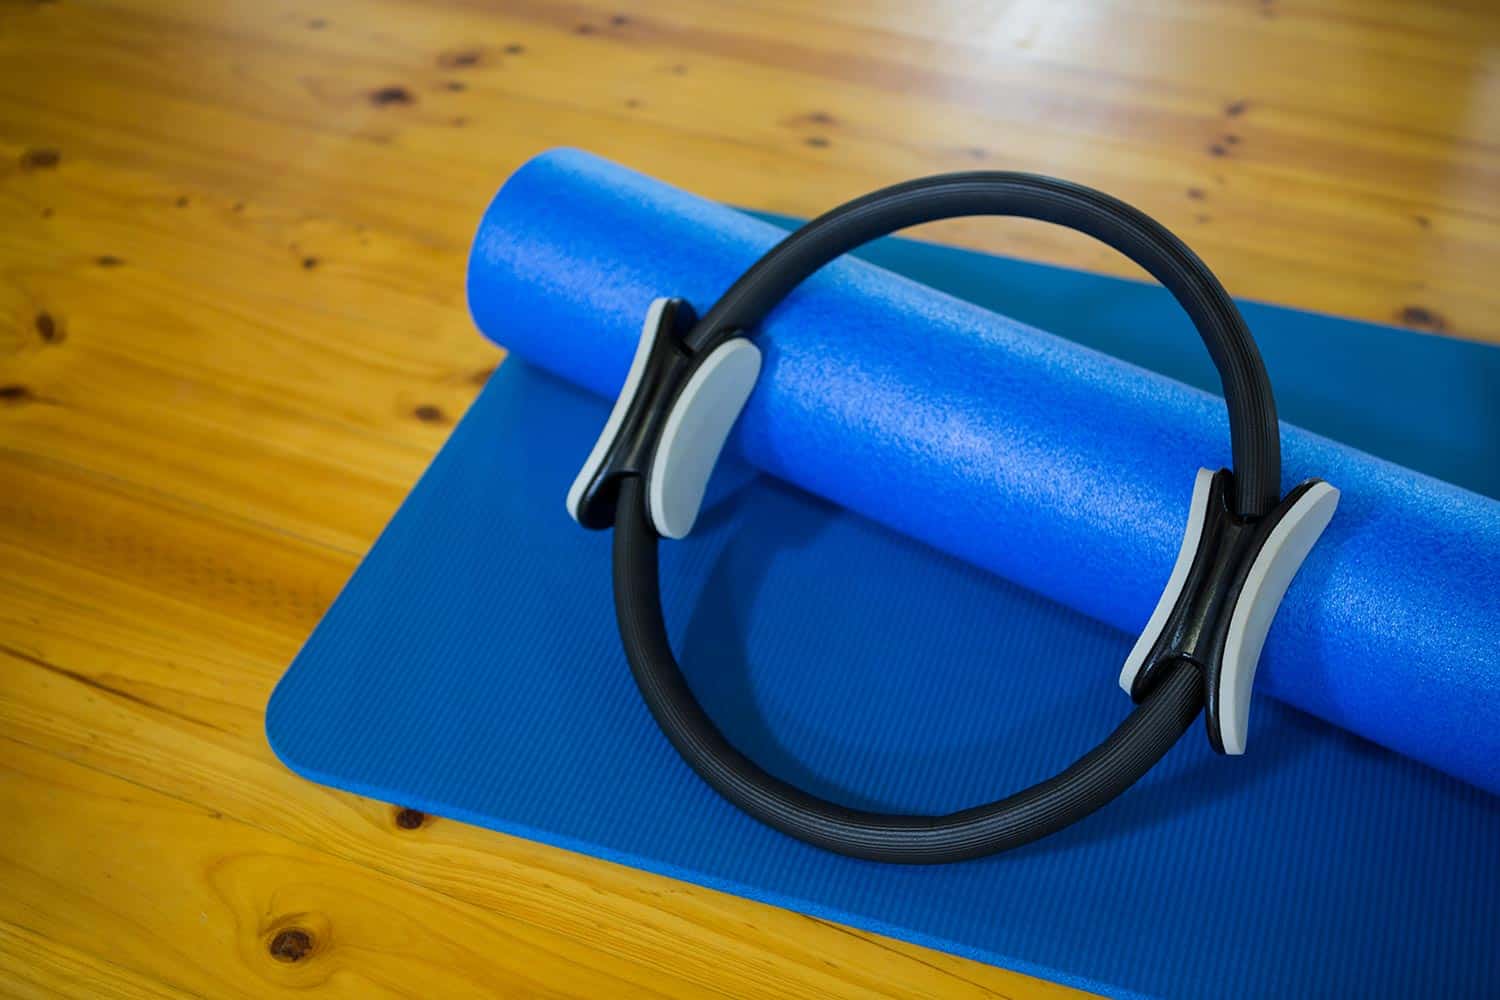 Pilates ring and exercise mat kept on wooden floor in fitness center